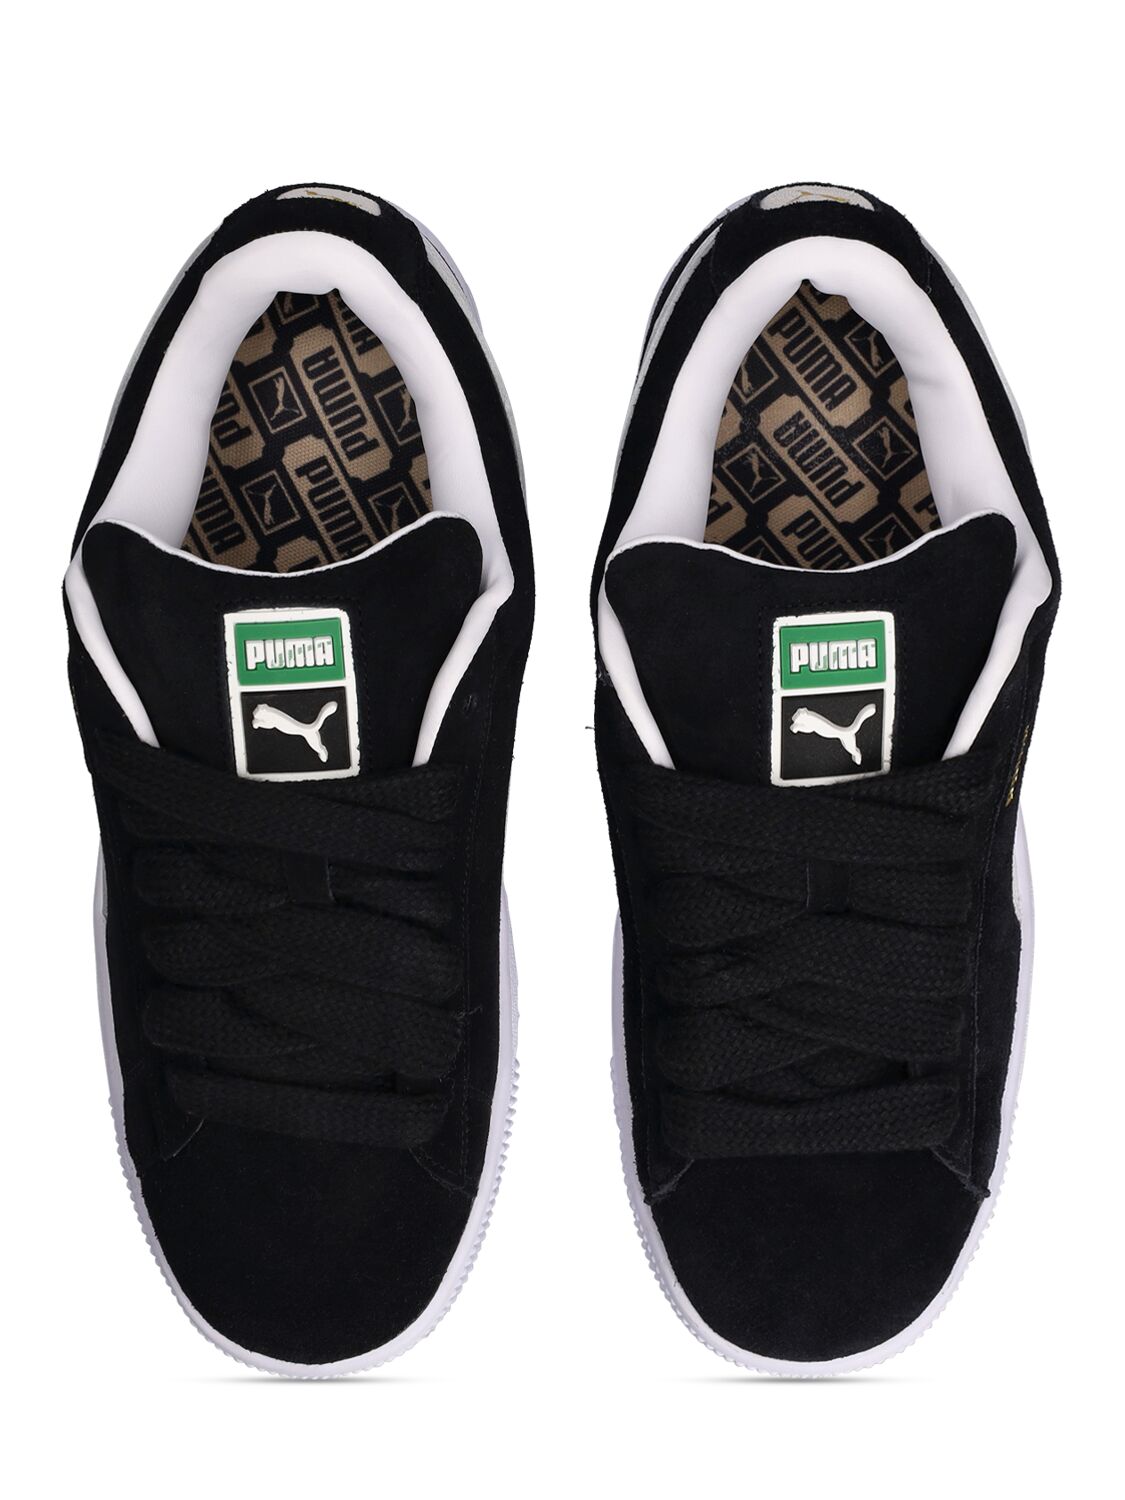 Shop Puma Suede Xl Sneakers In Black,white